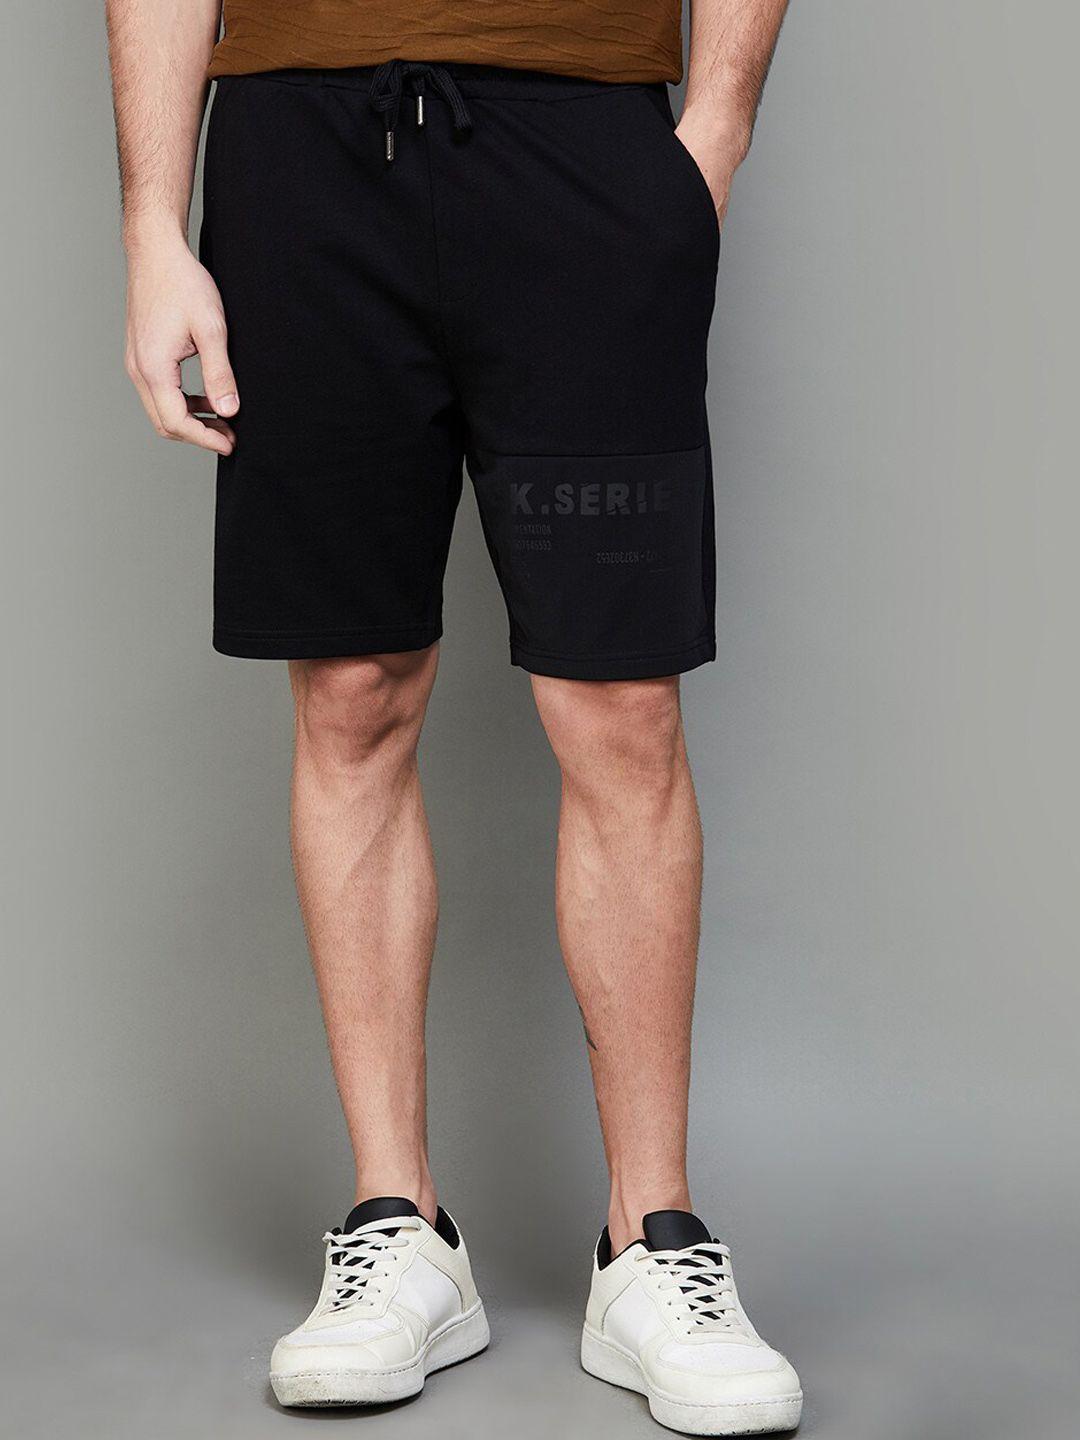 bossini-men-mid-rise-regular-shorts